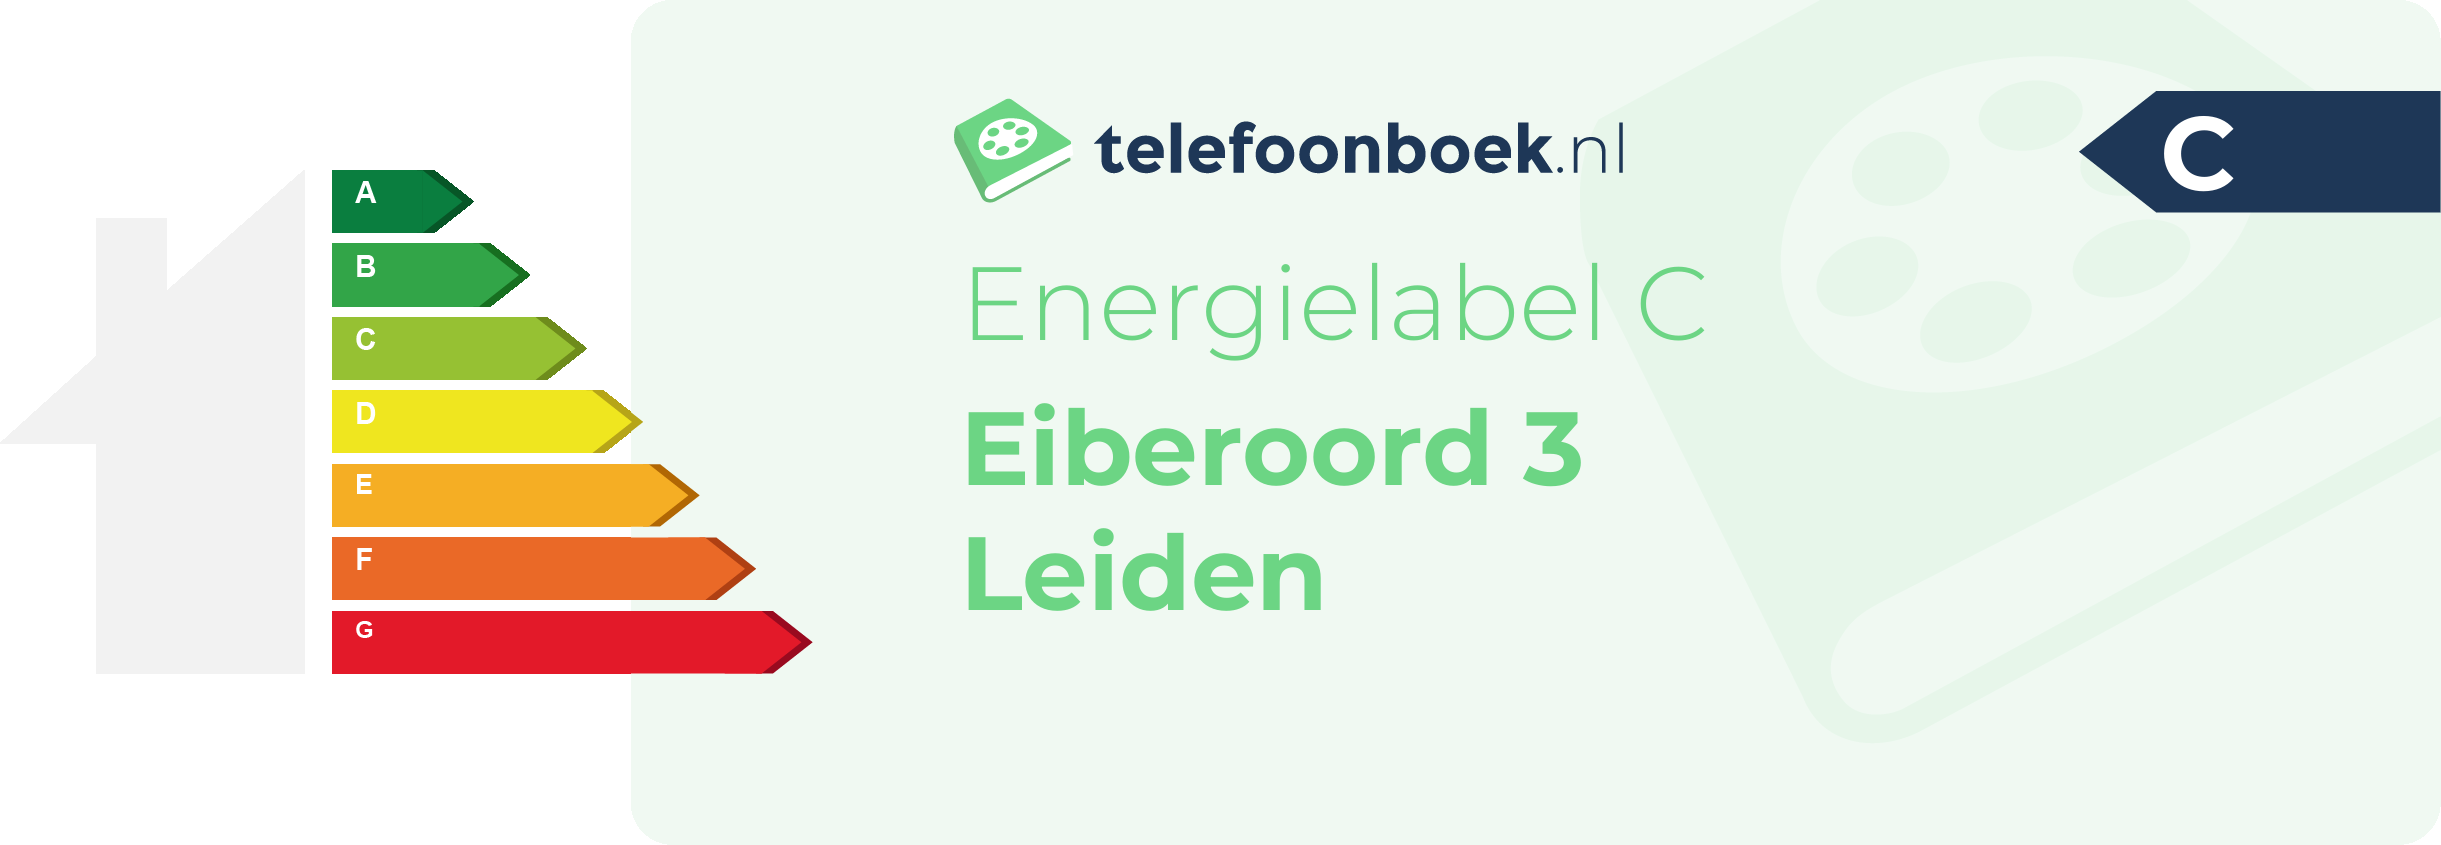 Energielabel Eiberoord 3 Leiden